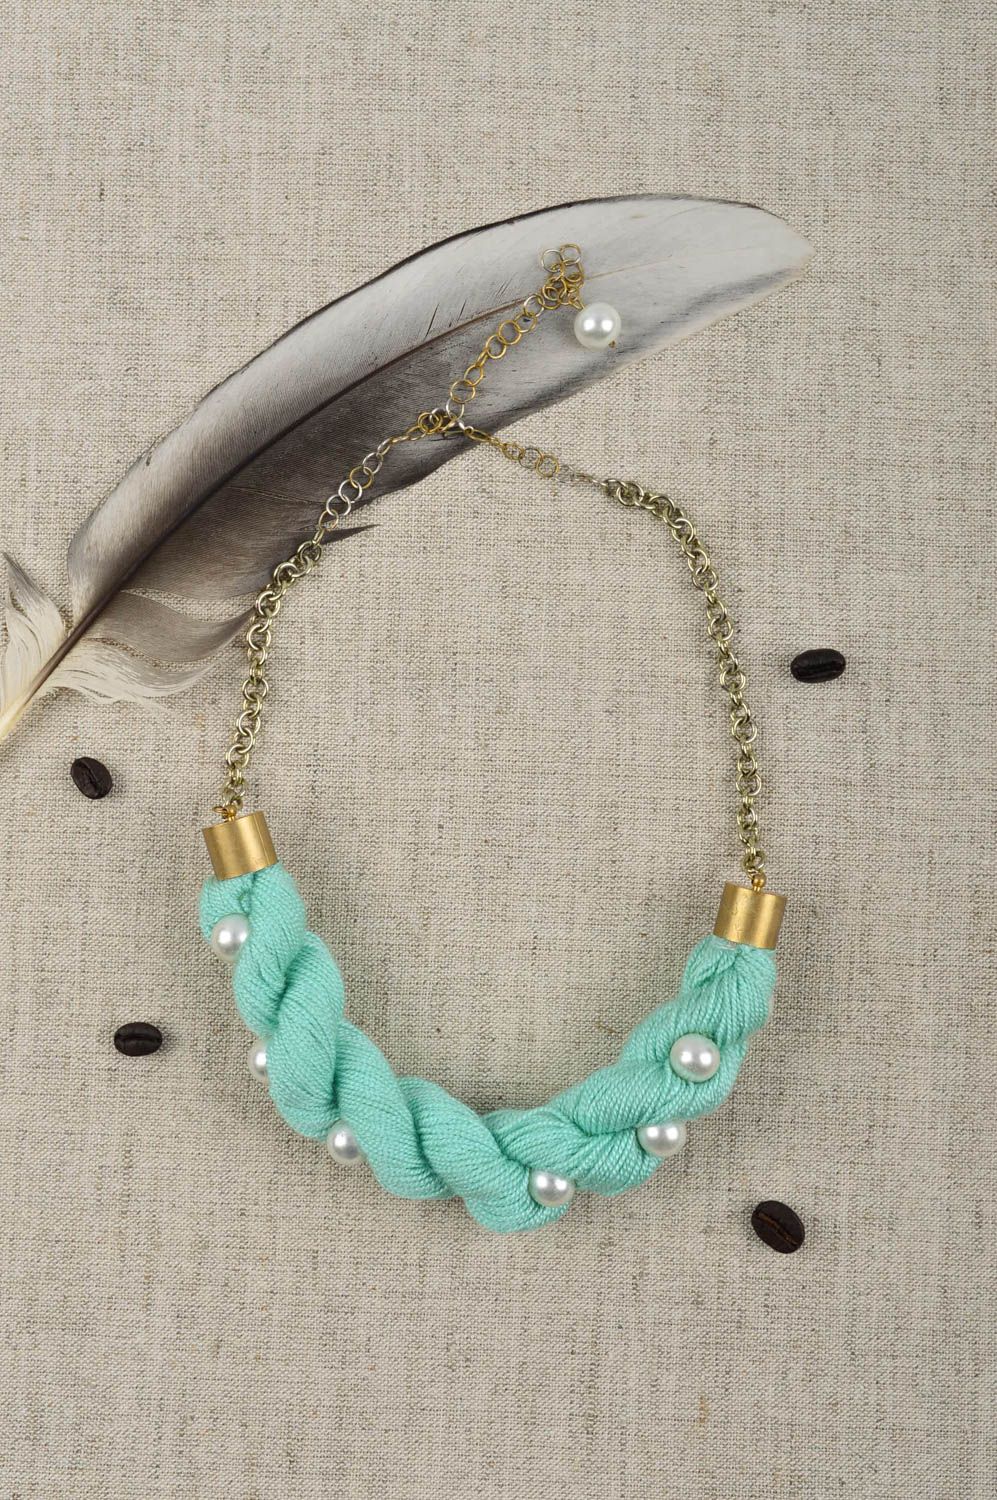 Handmade beaded necklace yarn necklace handmade accessories stylish jewelry photo 1